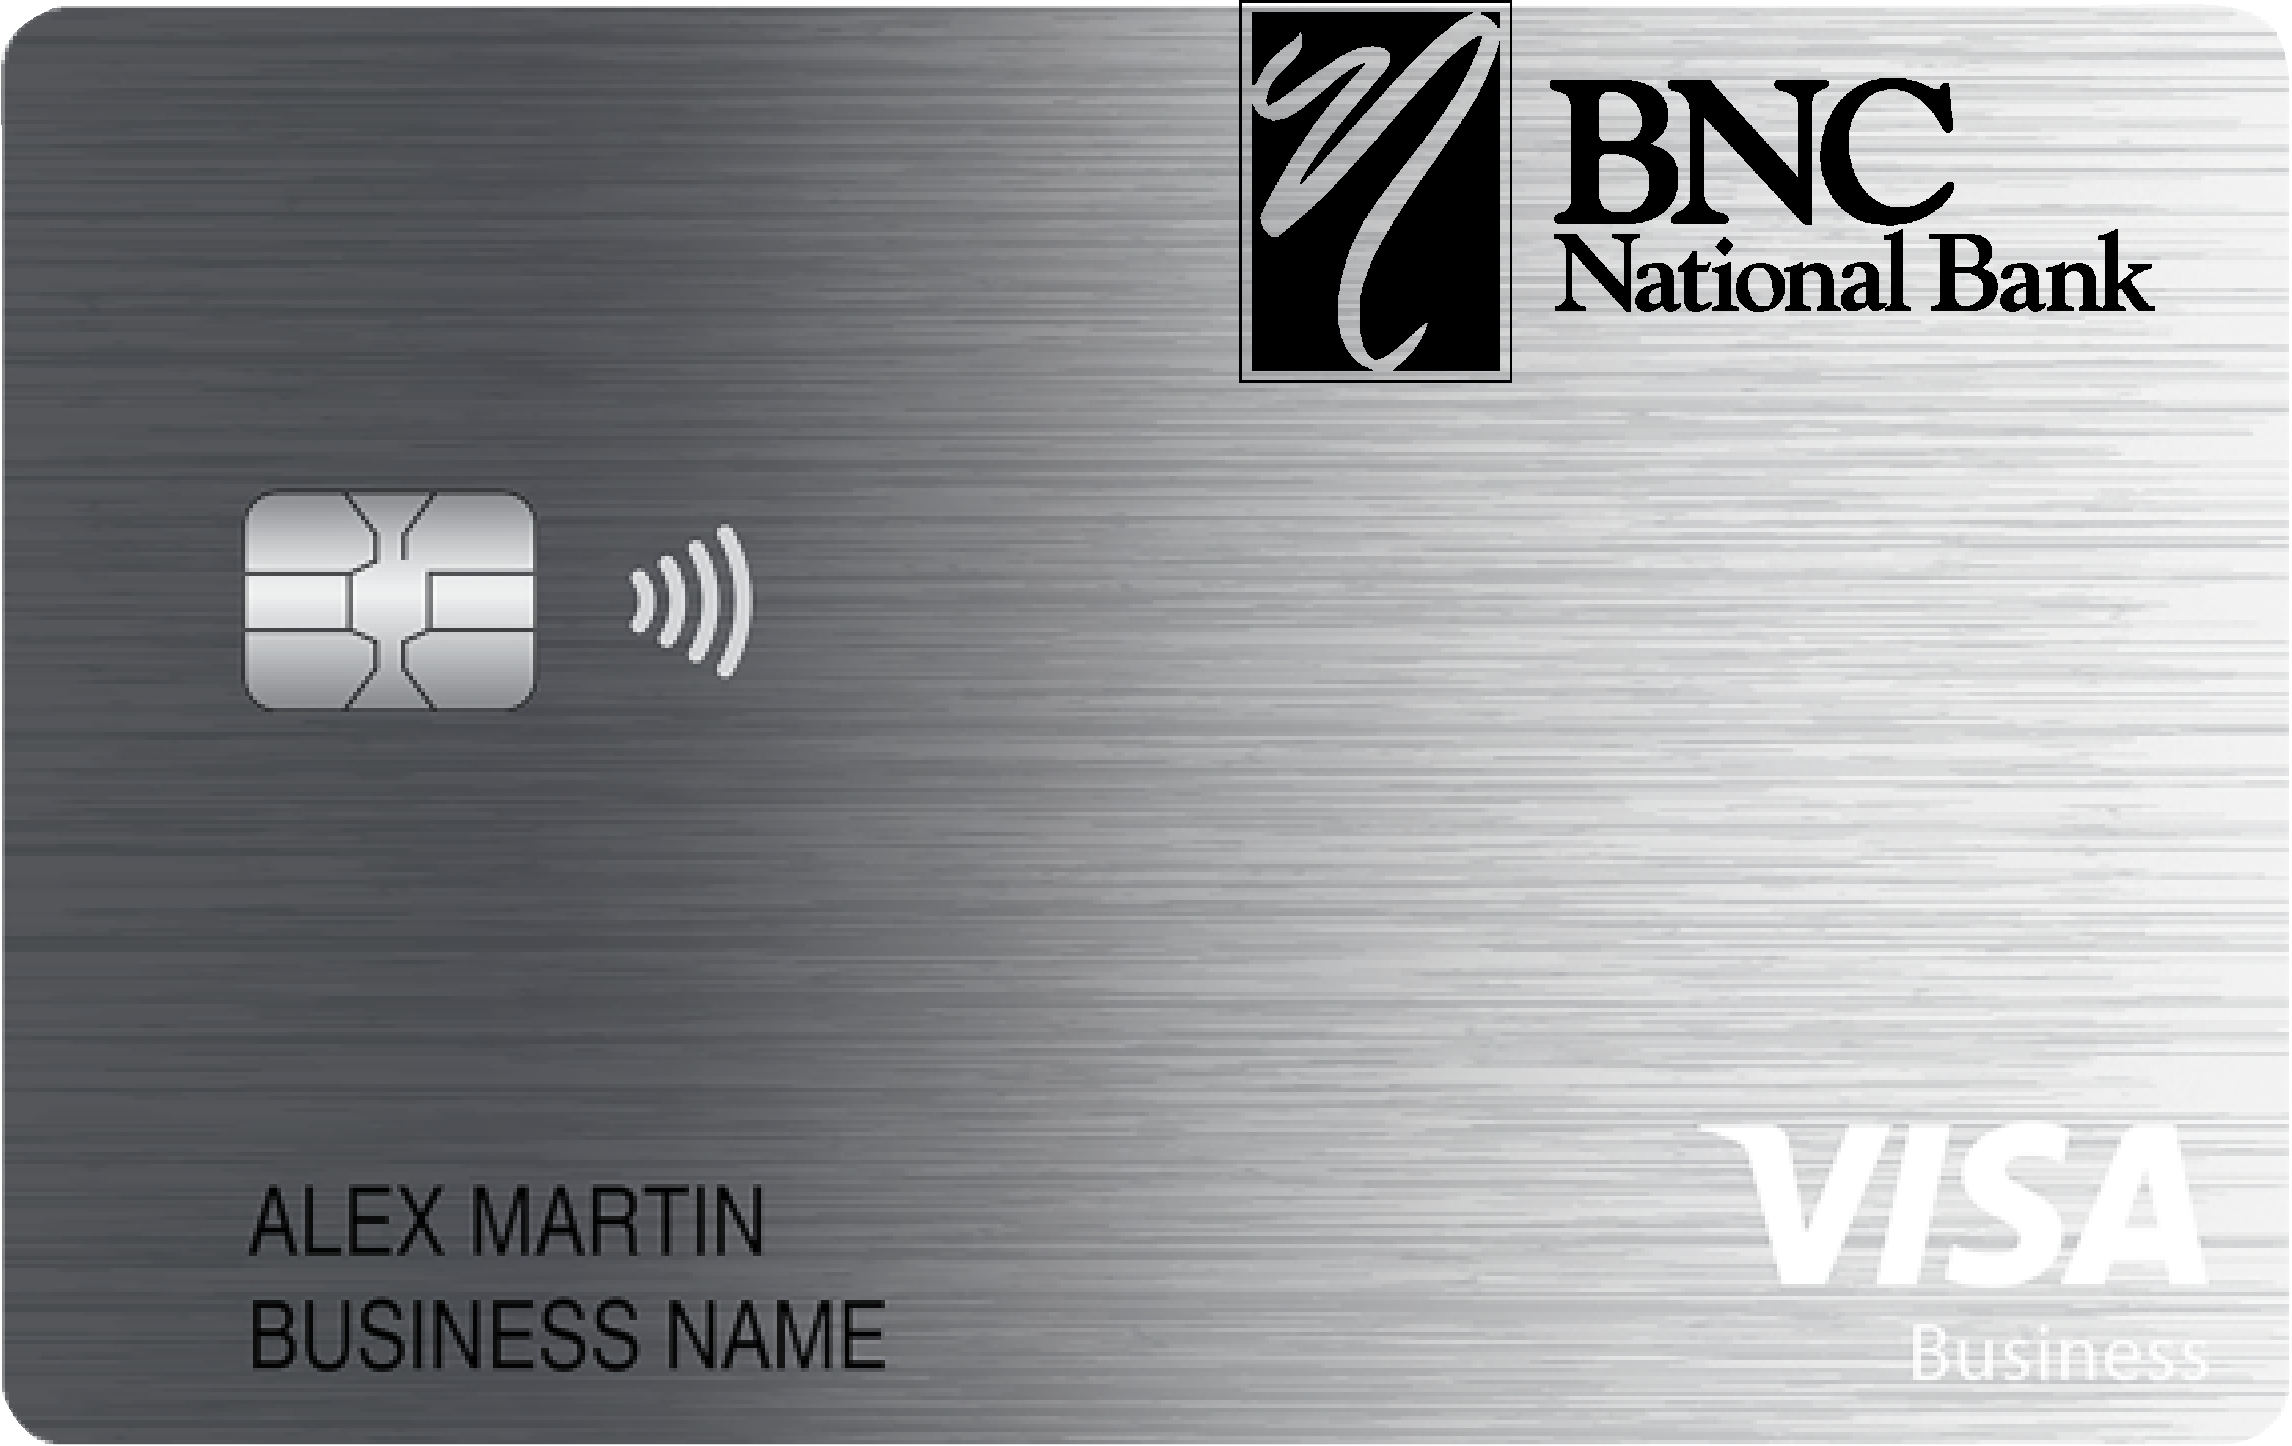 BNC National Bank Business Card